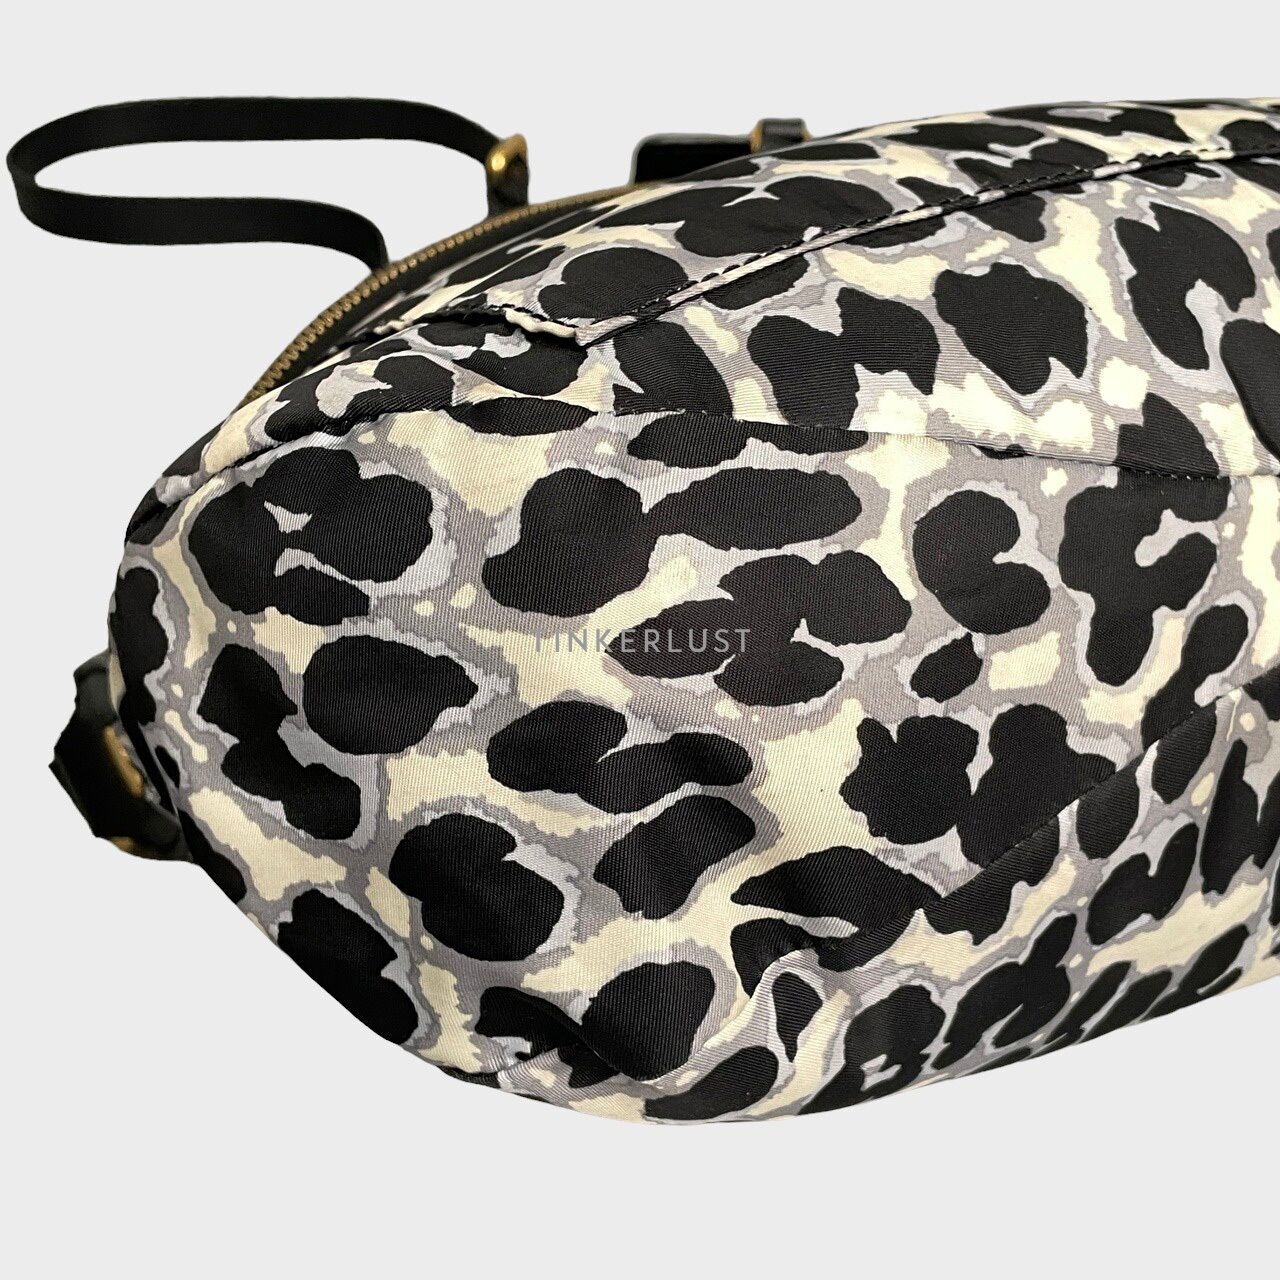 Marc by Marc Jacobs Preppy Nylon Natasha Leopard Sling Bag 